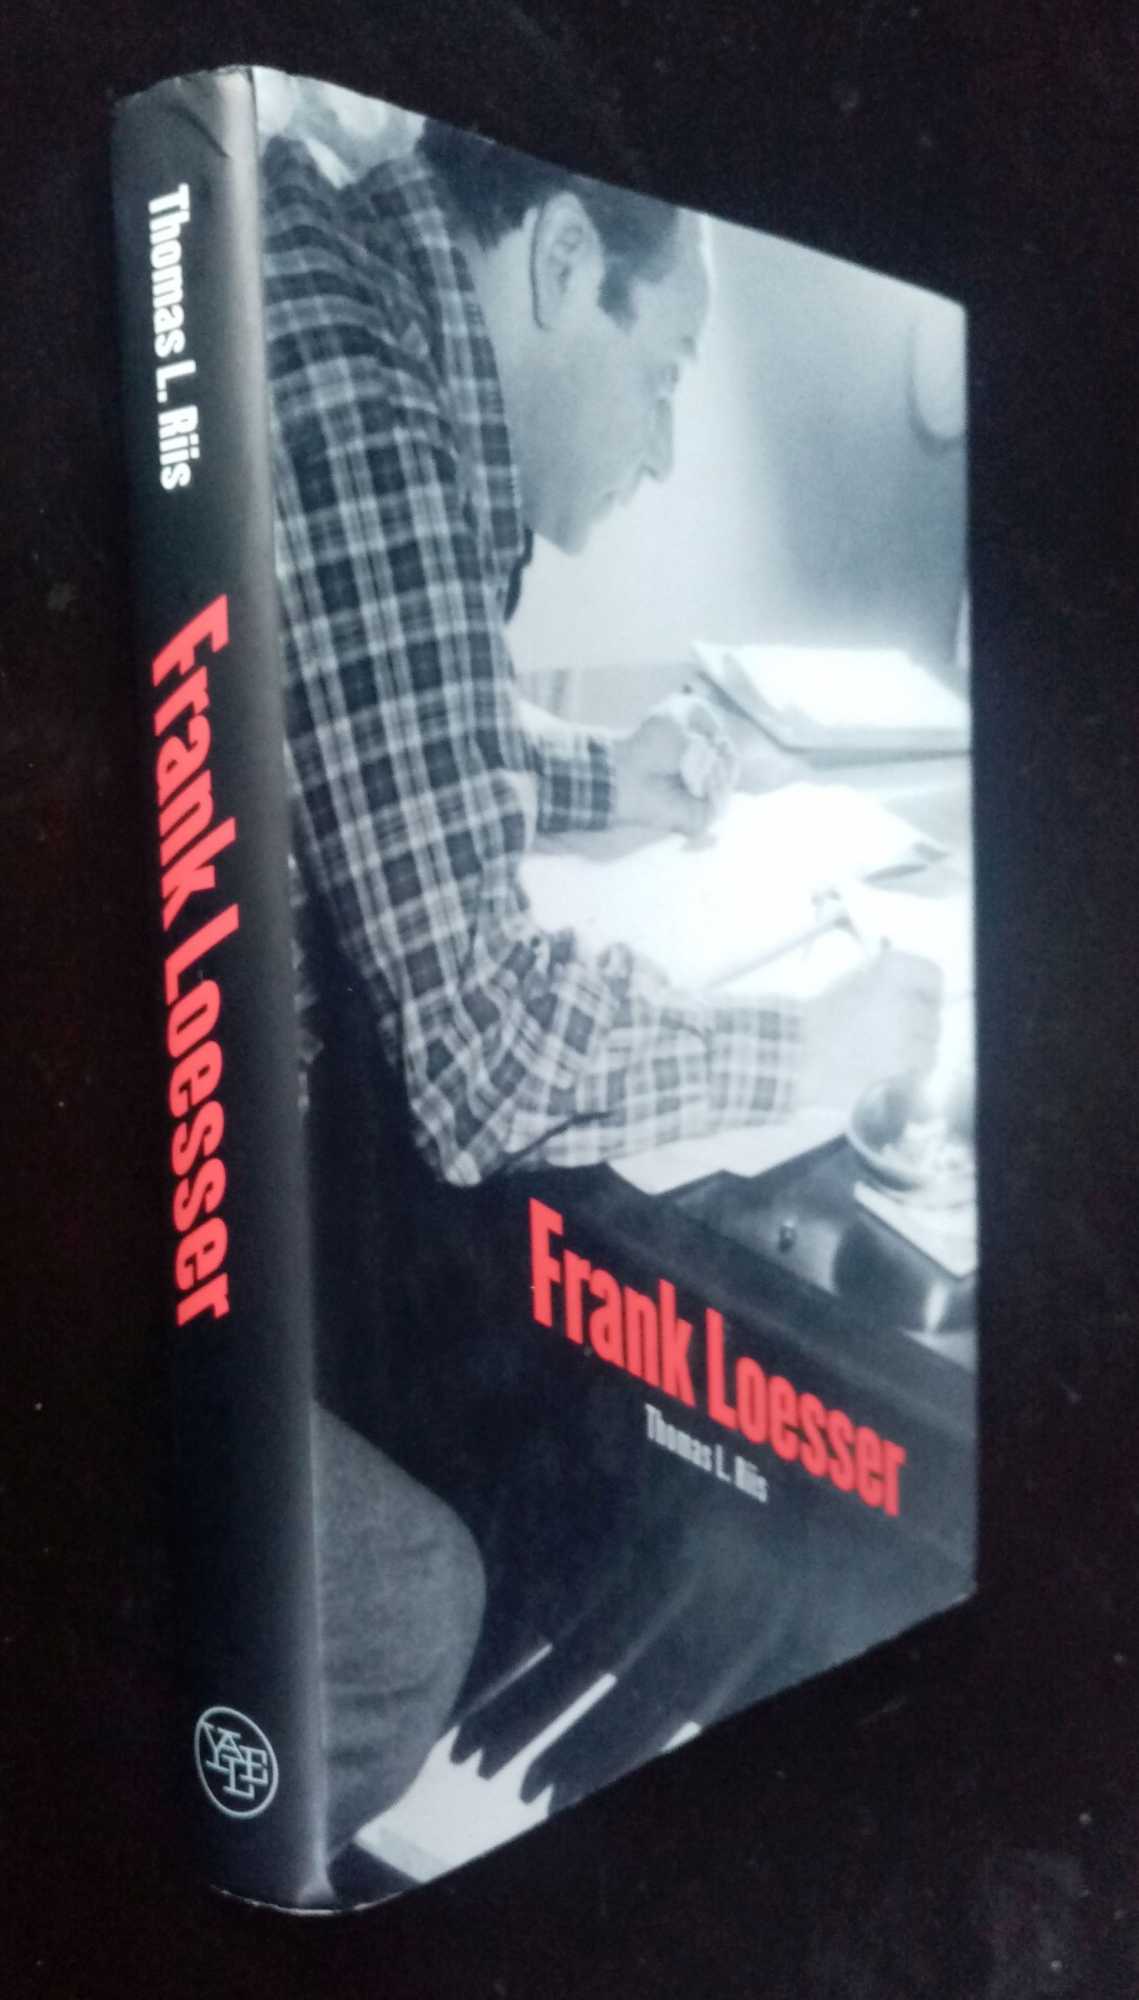 Thomas L. Riis - Frank Loesser